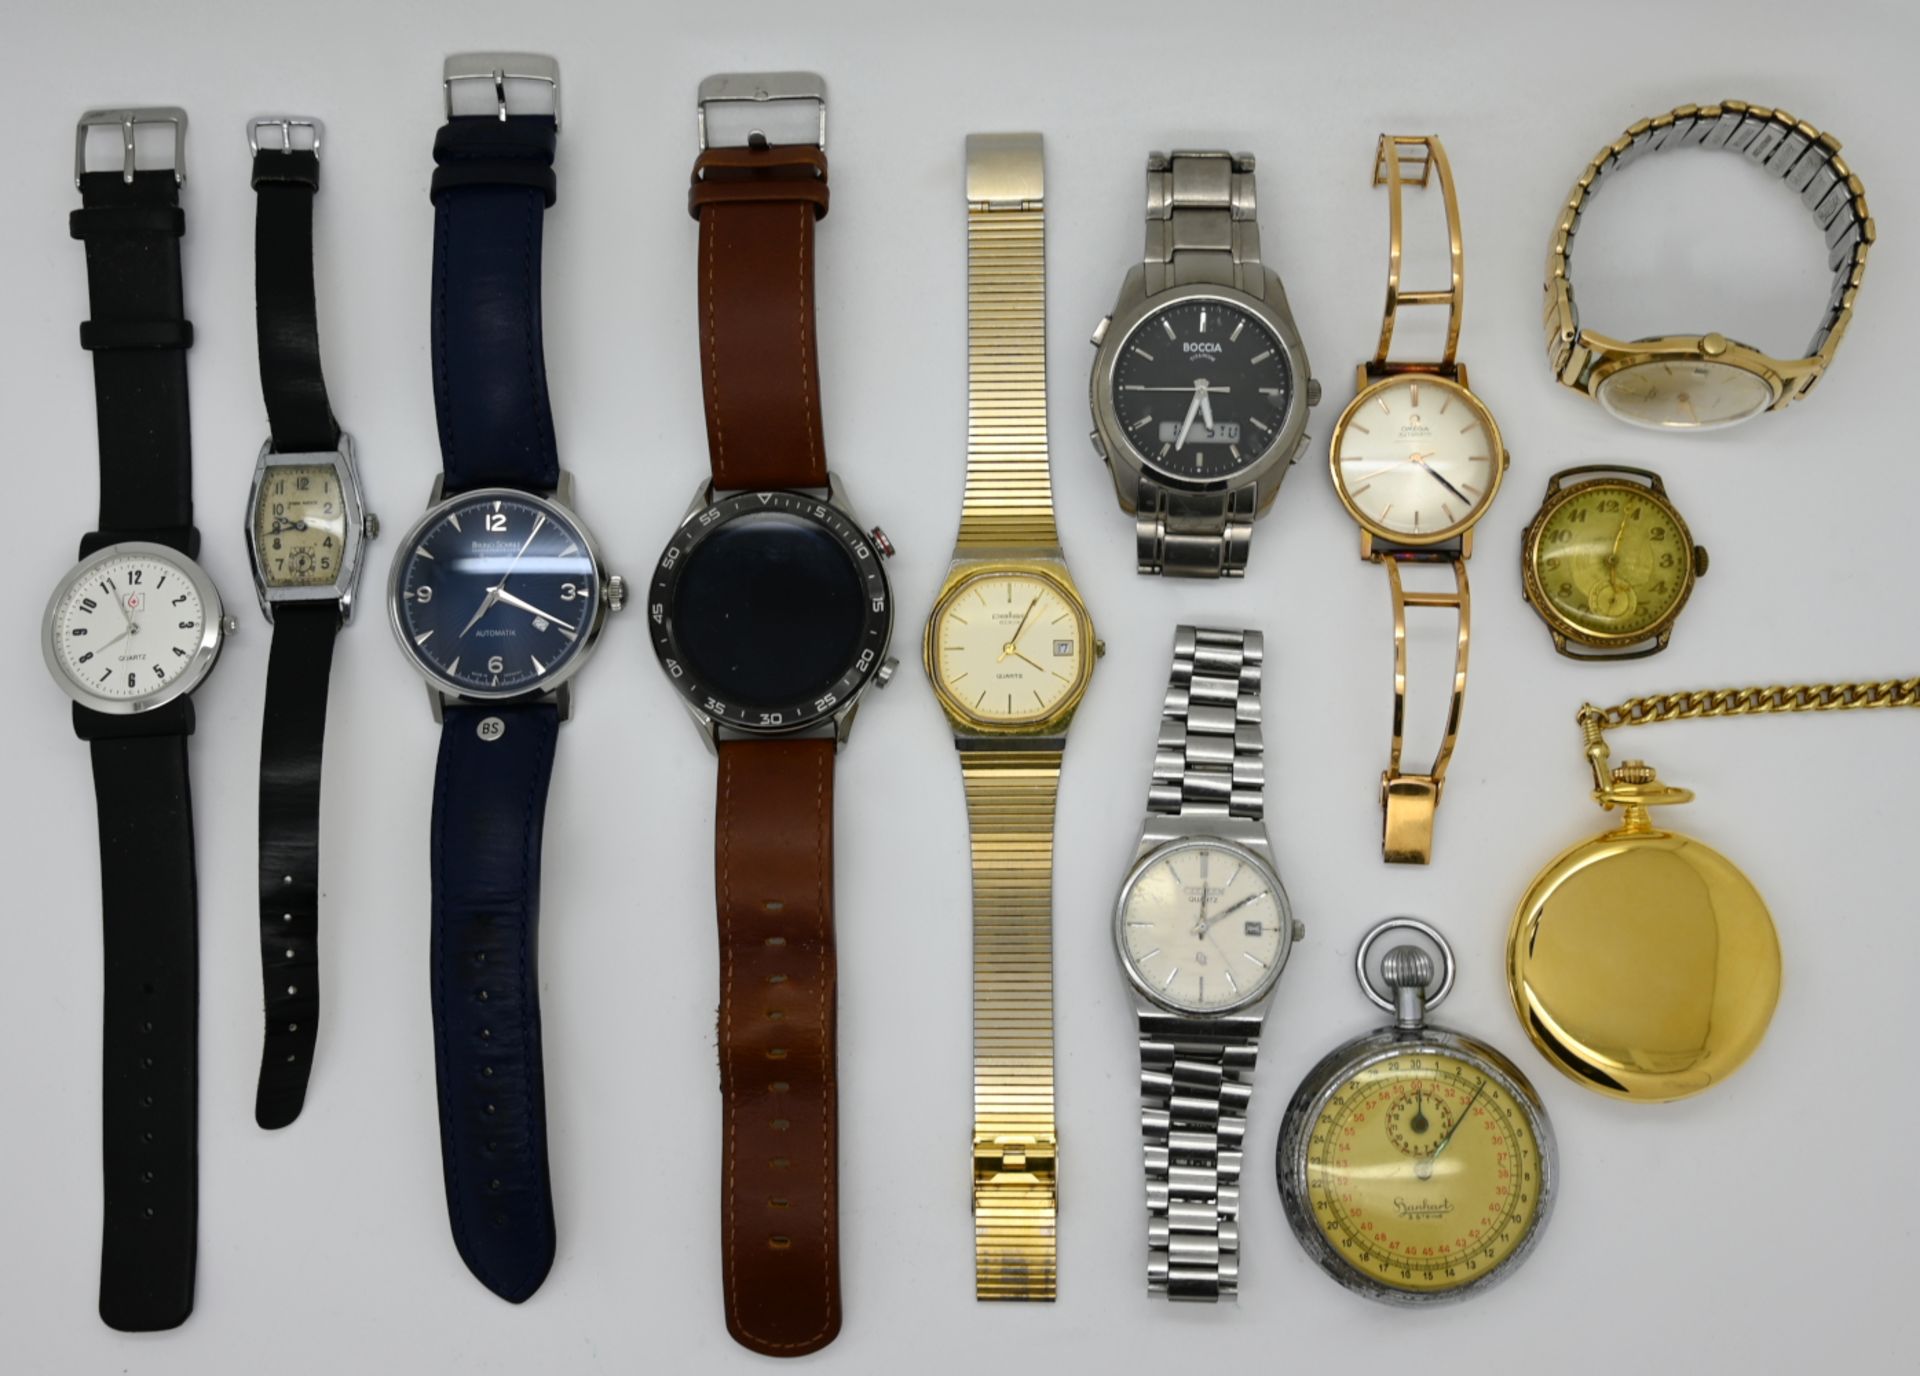 1 Konv. Armbanduhren u.a.: Edelstahl, Mode, Metall u.a., z.T. vergoldet, z.T. mit Lederband, BRUNO S